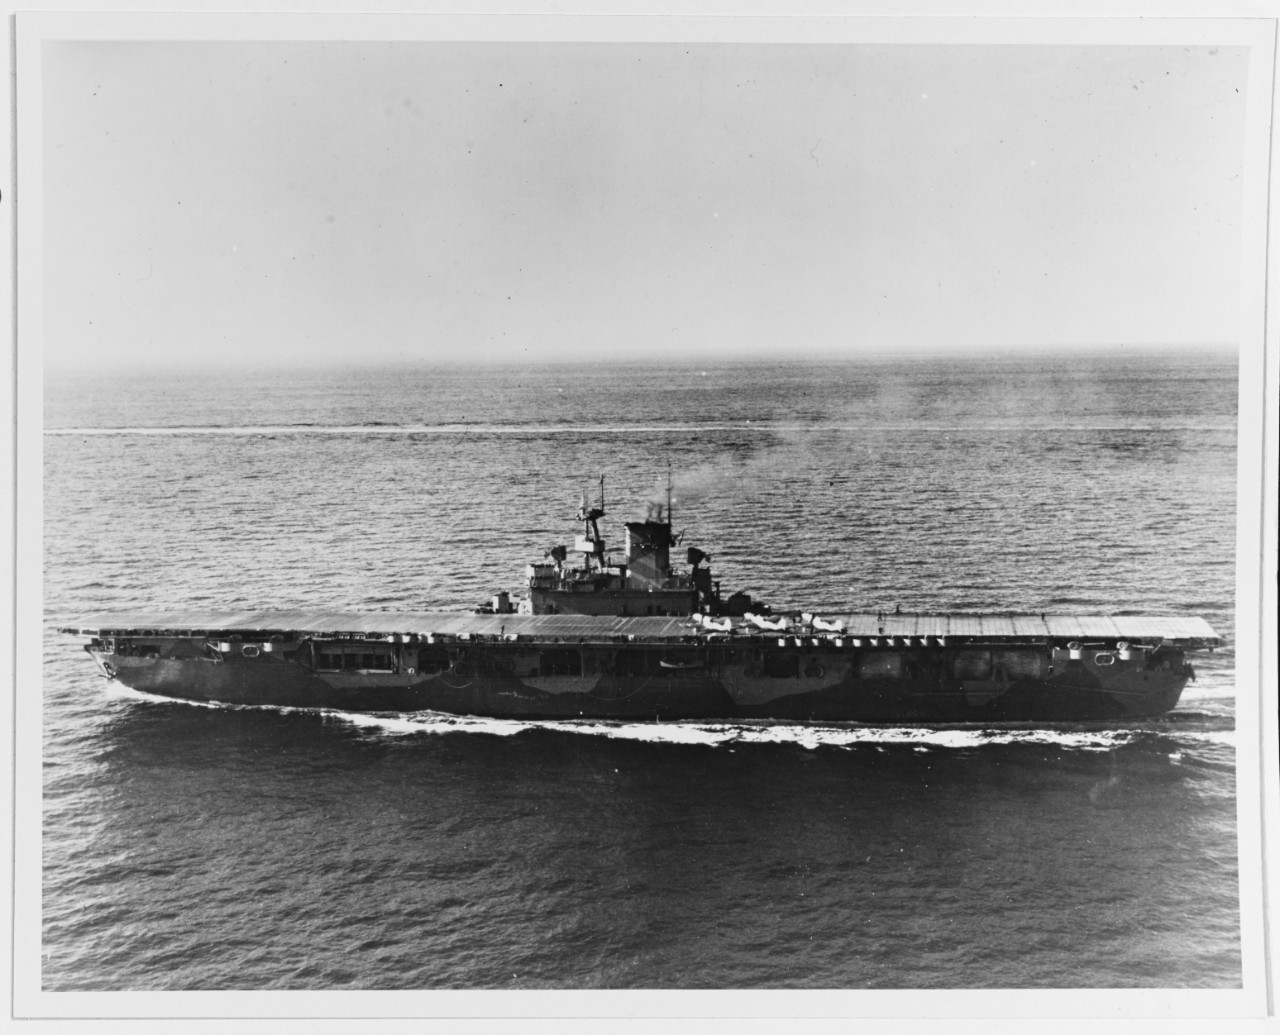 USS WASP (CV-7)